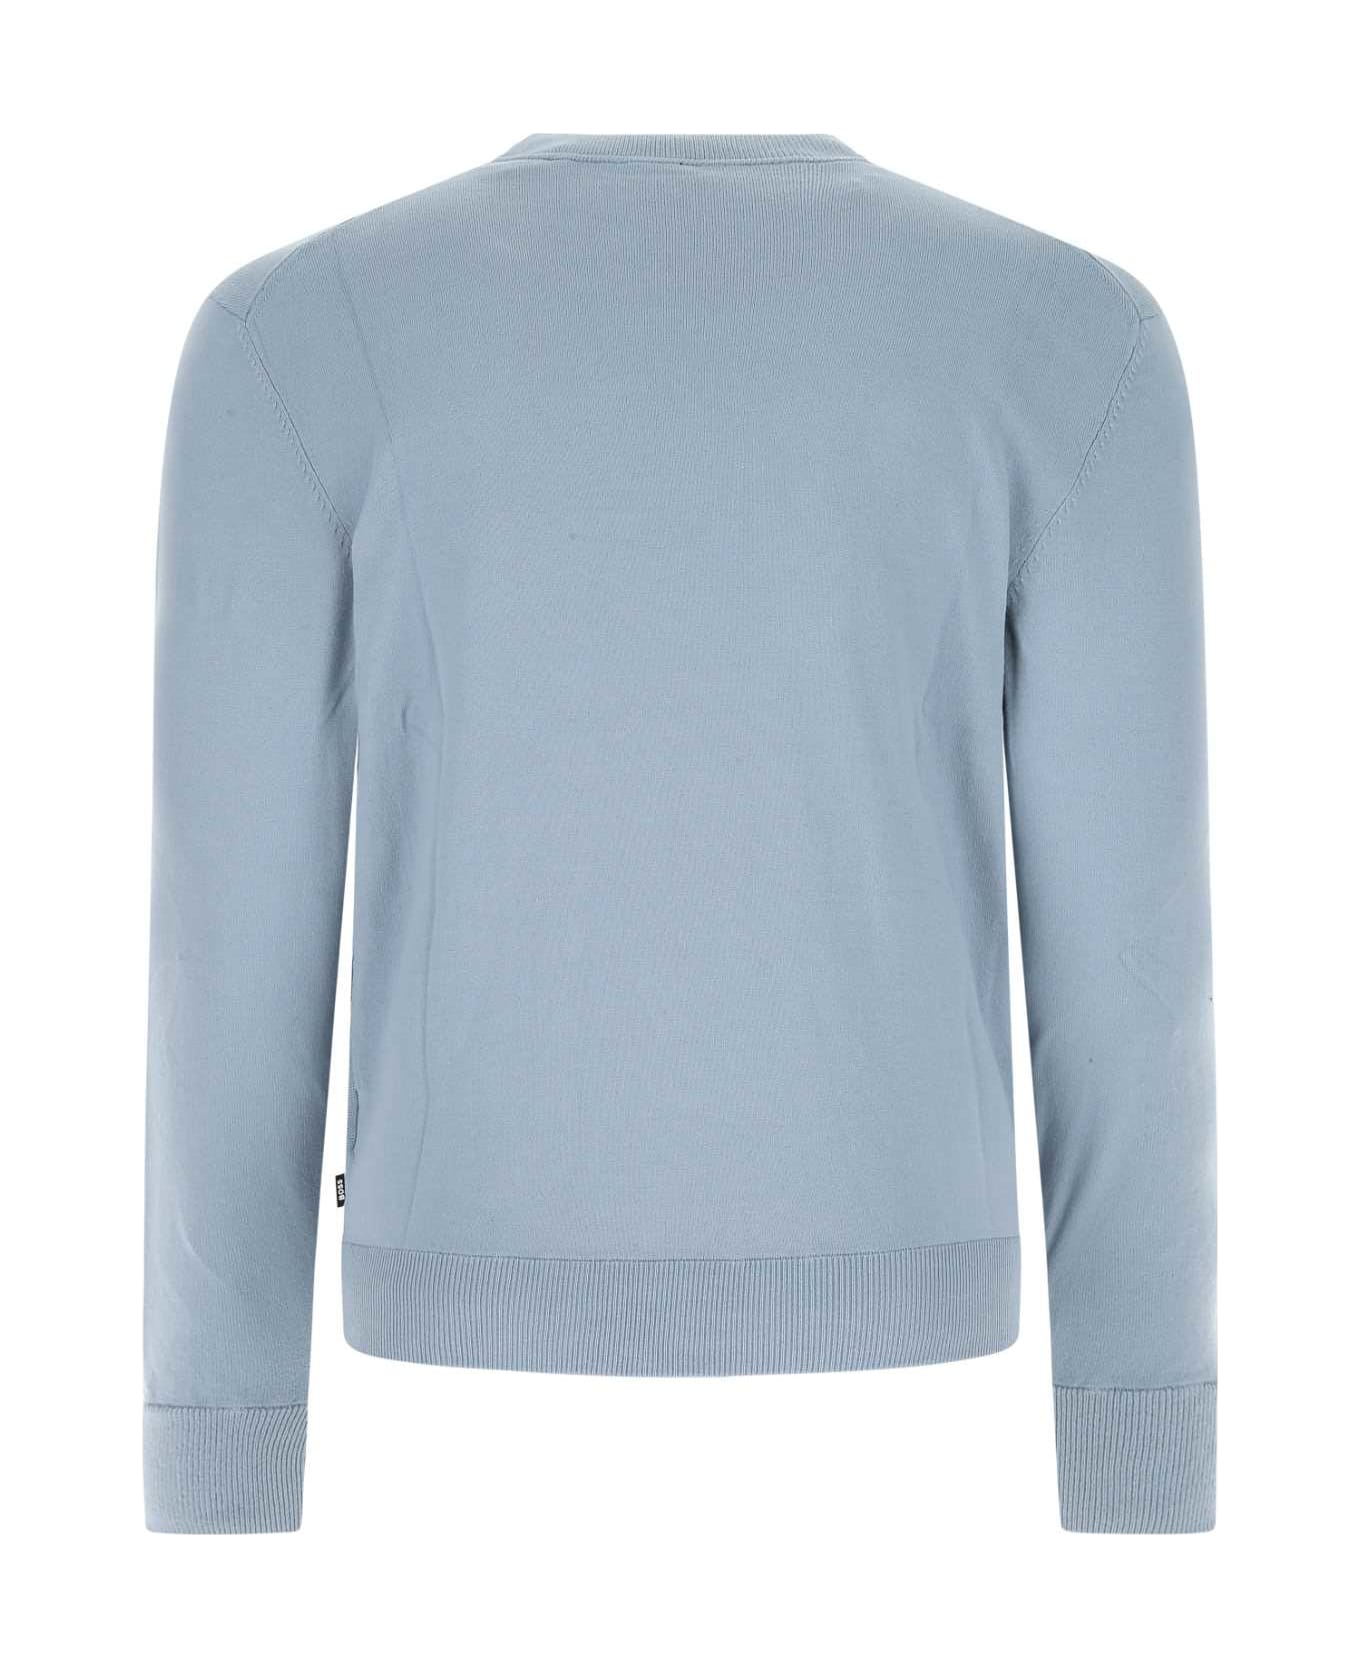 Hugo Boss Pastel Light-blue Cotton Blend Sweater - 451